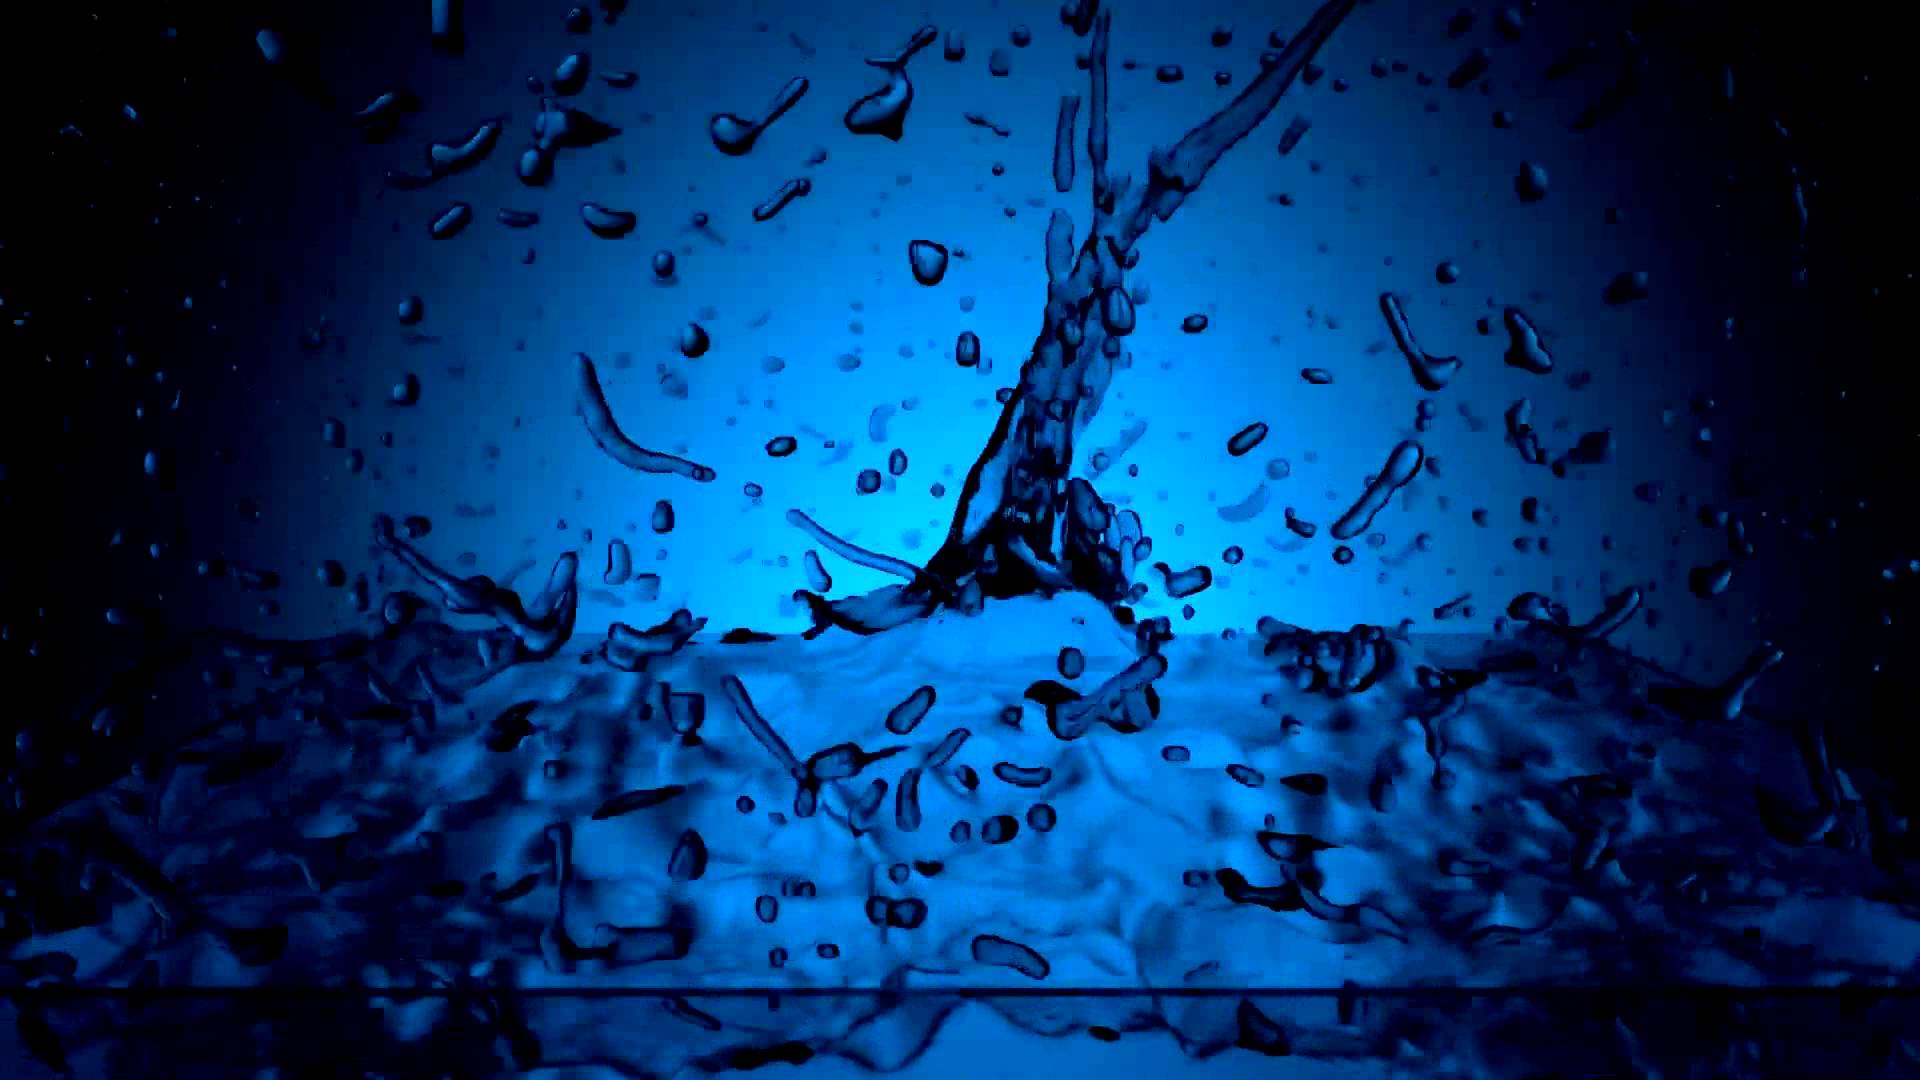 Blender Fluid: Water Drop Experiments - YouTube